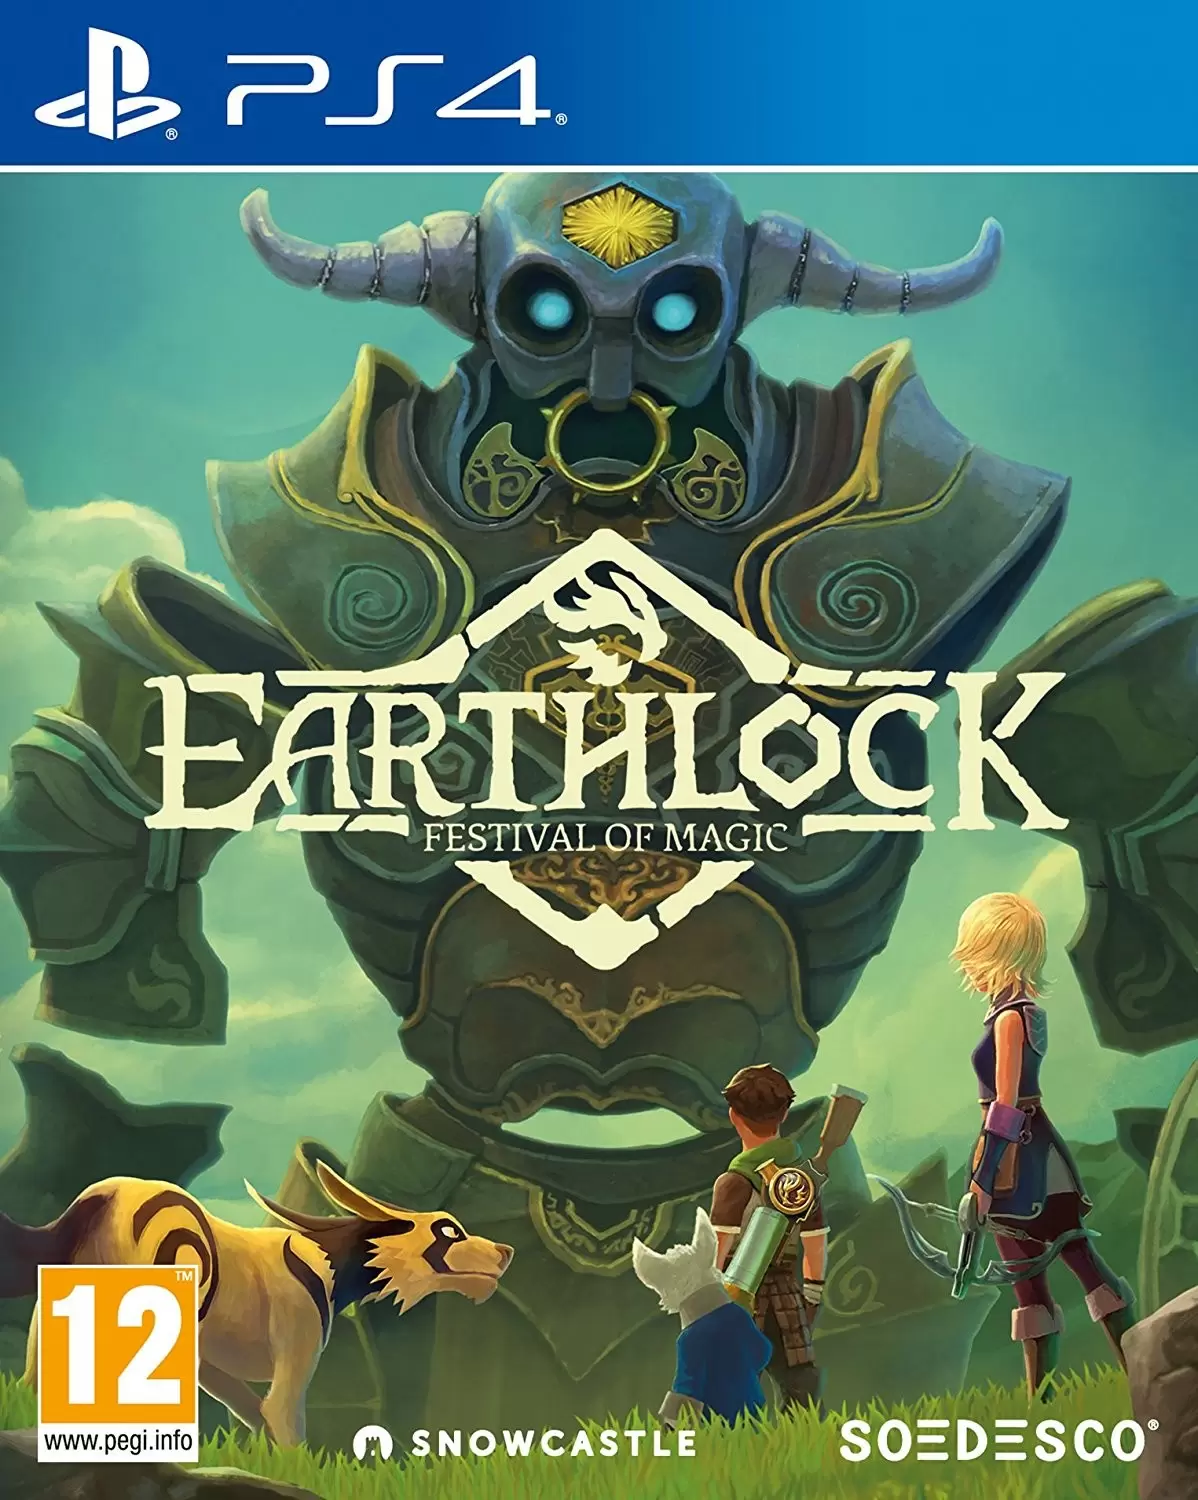 PS4 Games - Earthlock - Festival of Magic